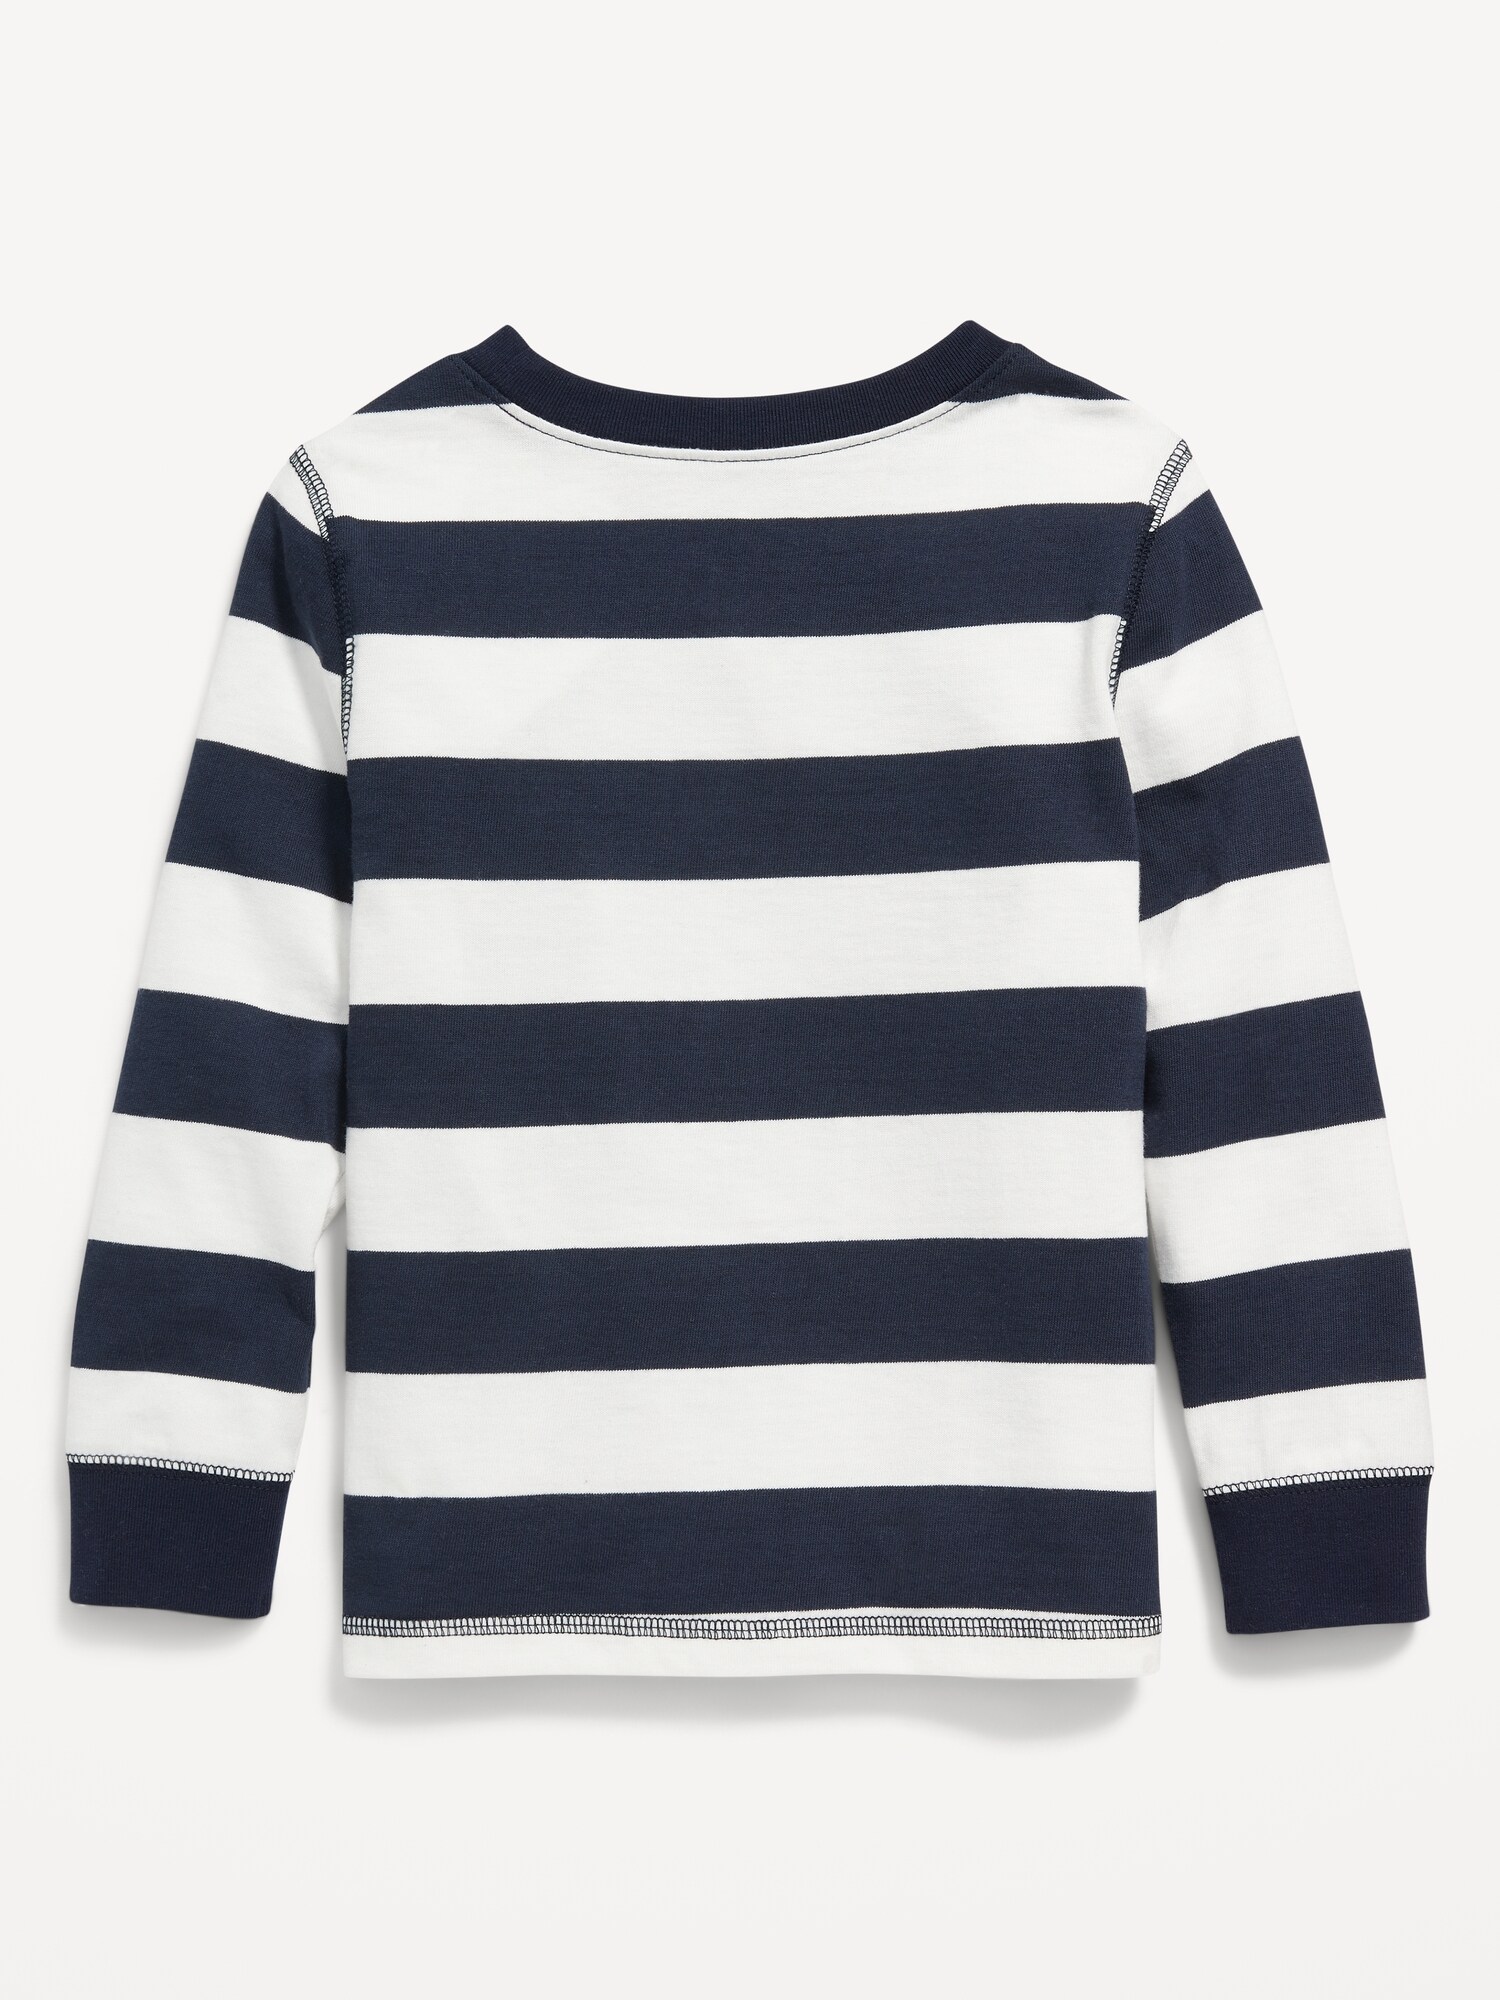 Unisex Long-Sleeve Striped Pocket T-Shirt for Toddler